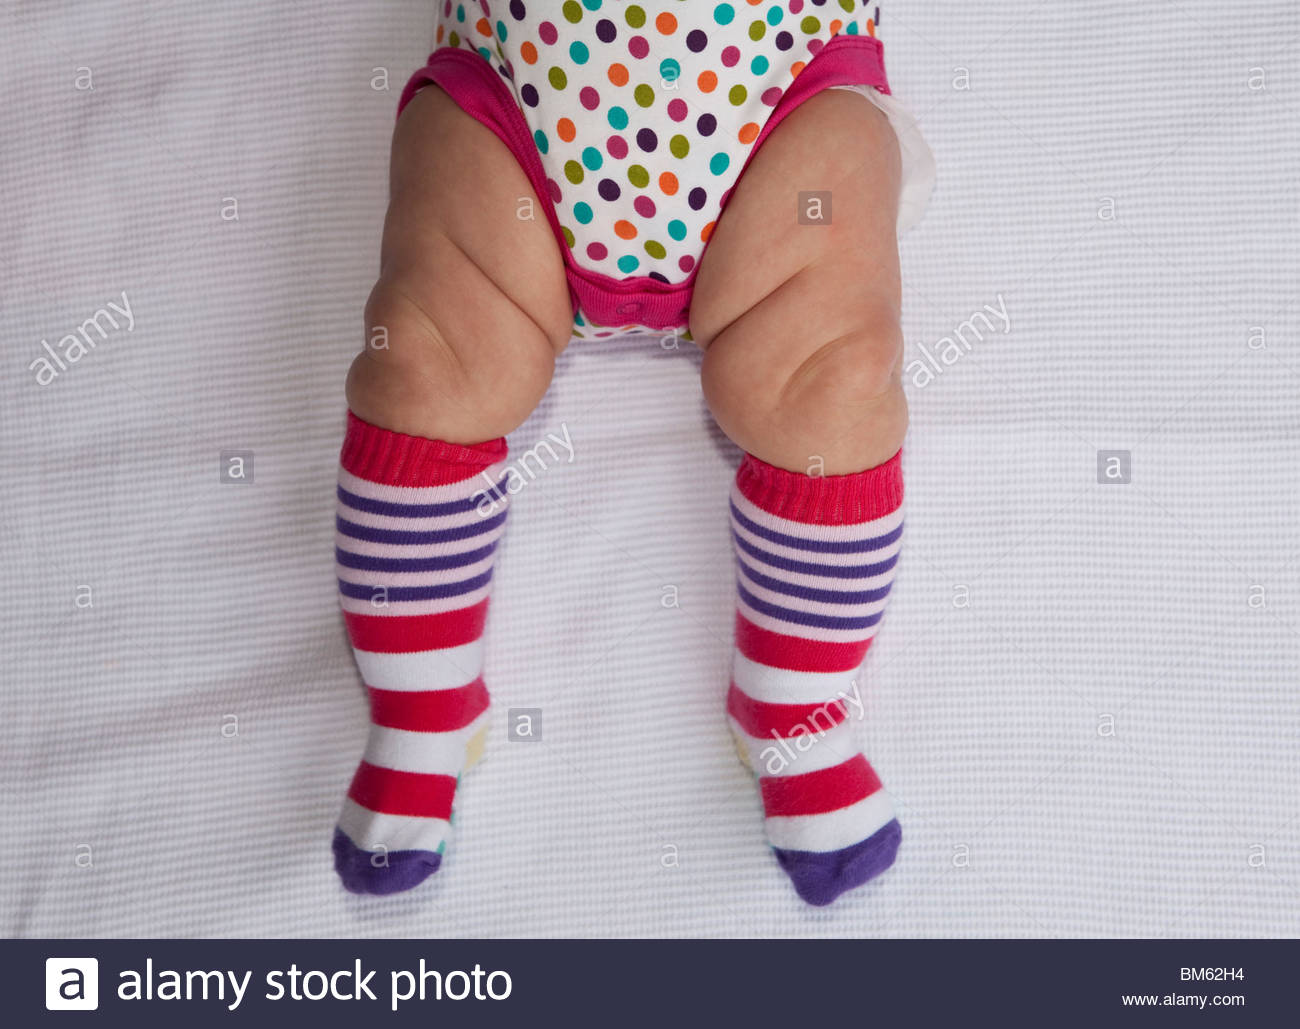 Chubby baby legs